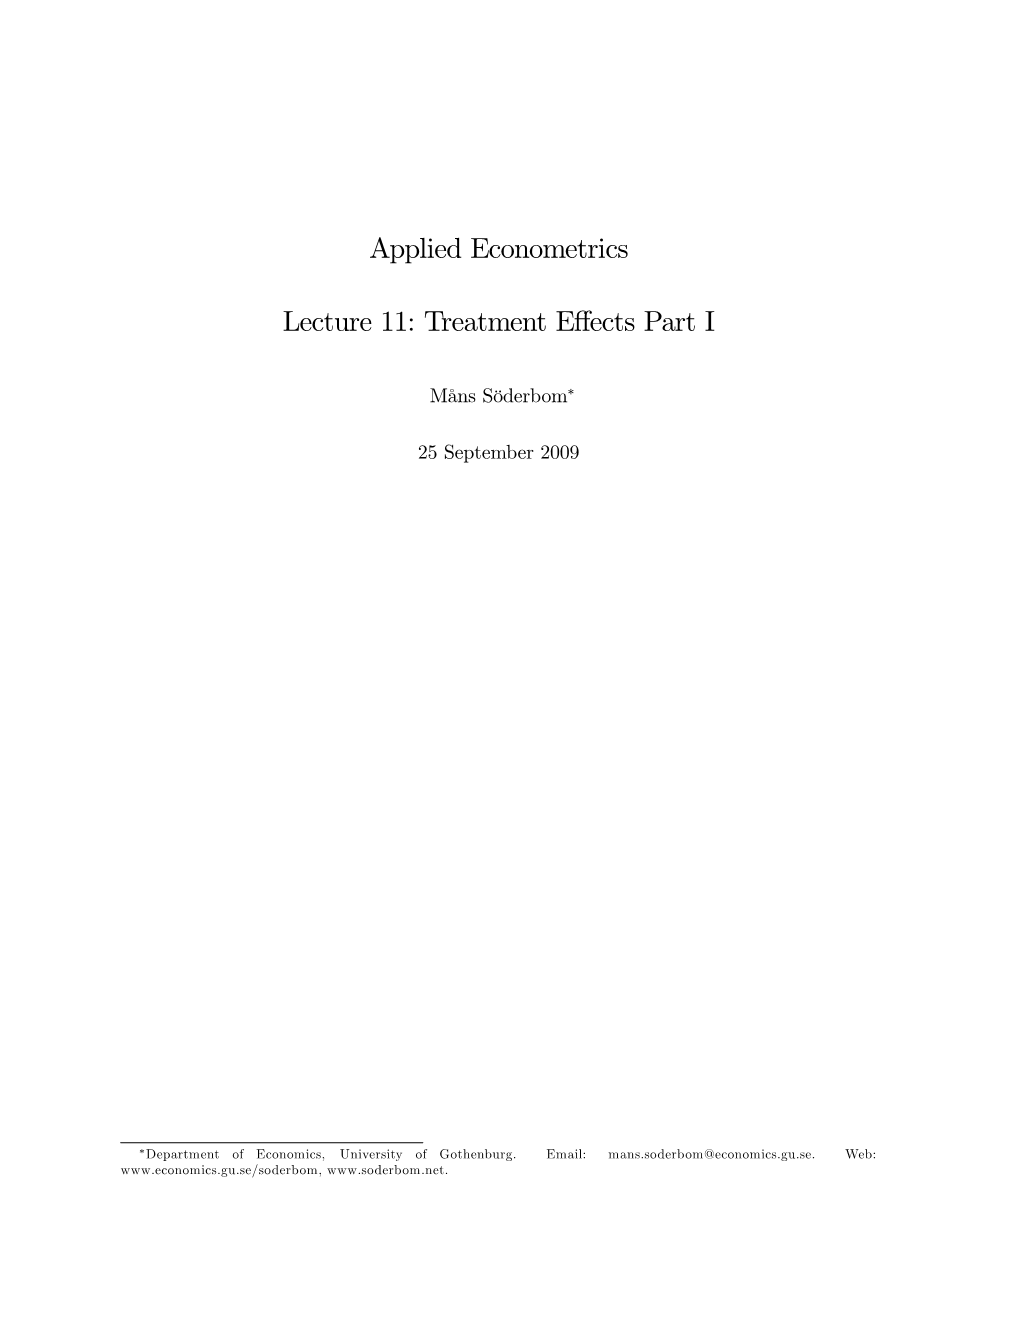 Applied Econometrics Lecture 11: Treatment Effects Part I